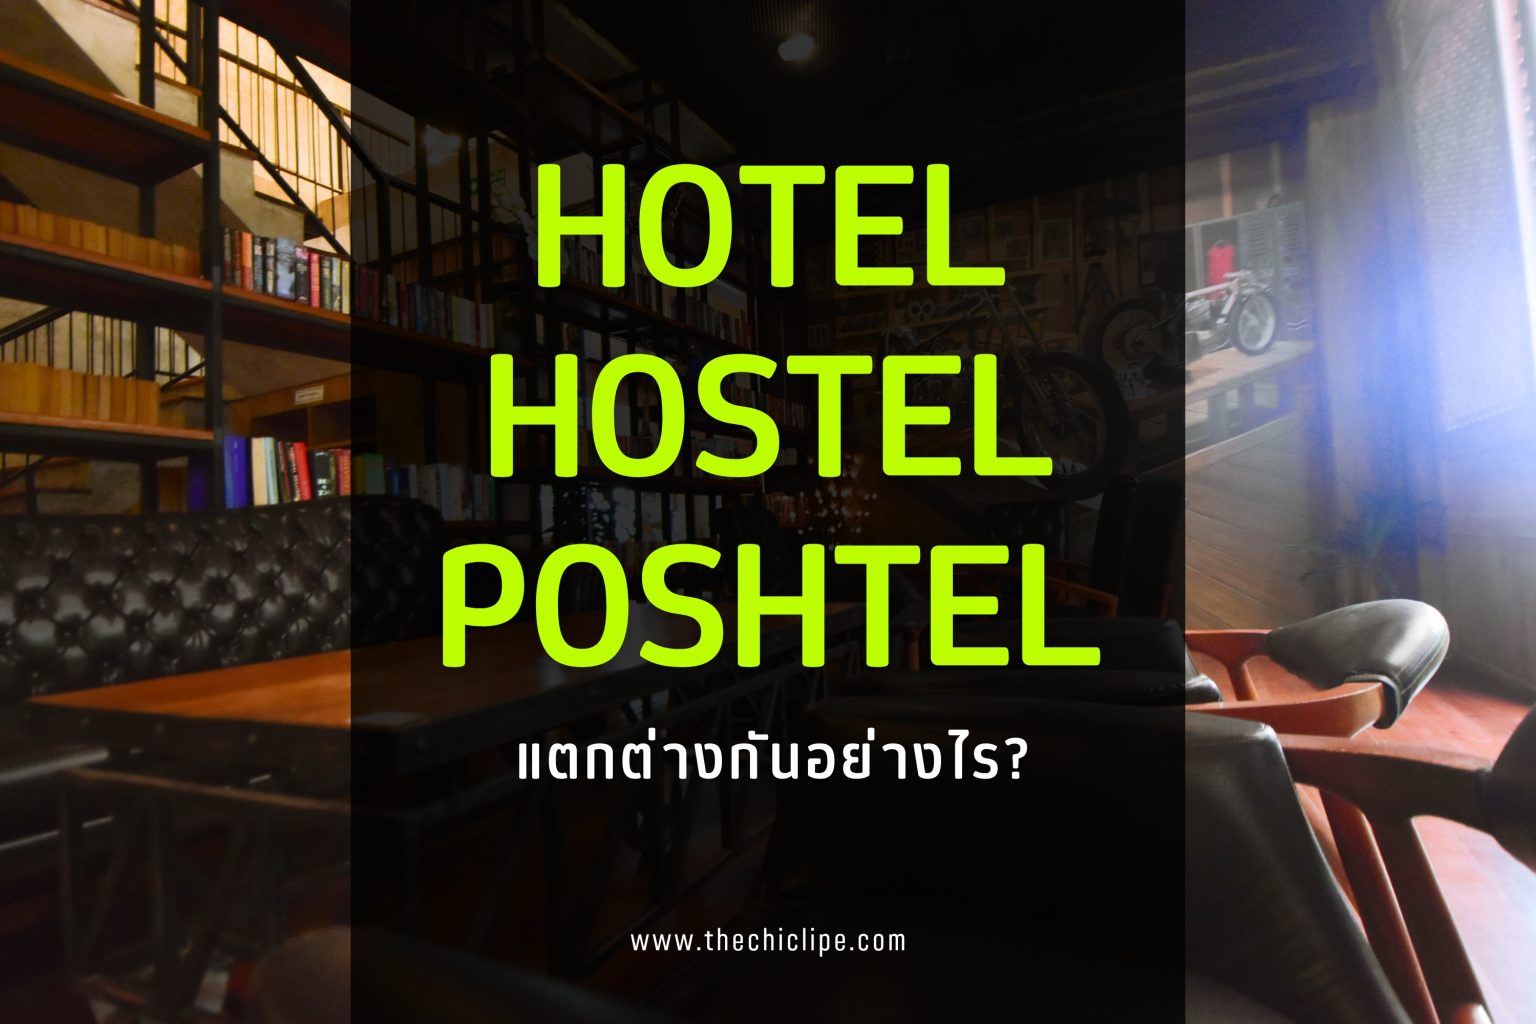 Hotel Hostel และ Poshtel แตกต่างกันอย่างไร มาหาคำตอบกันที่ เดอะชิค หลีเป๊ะ (The Chic Lipe)